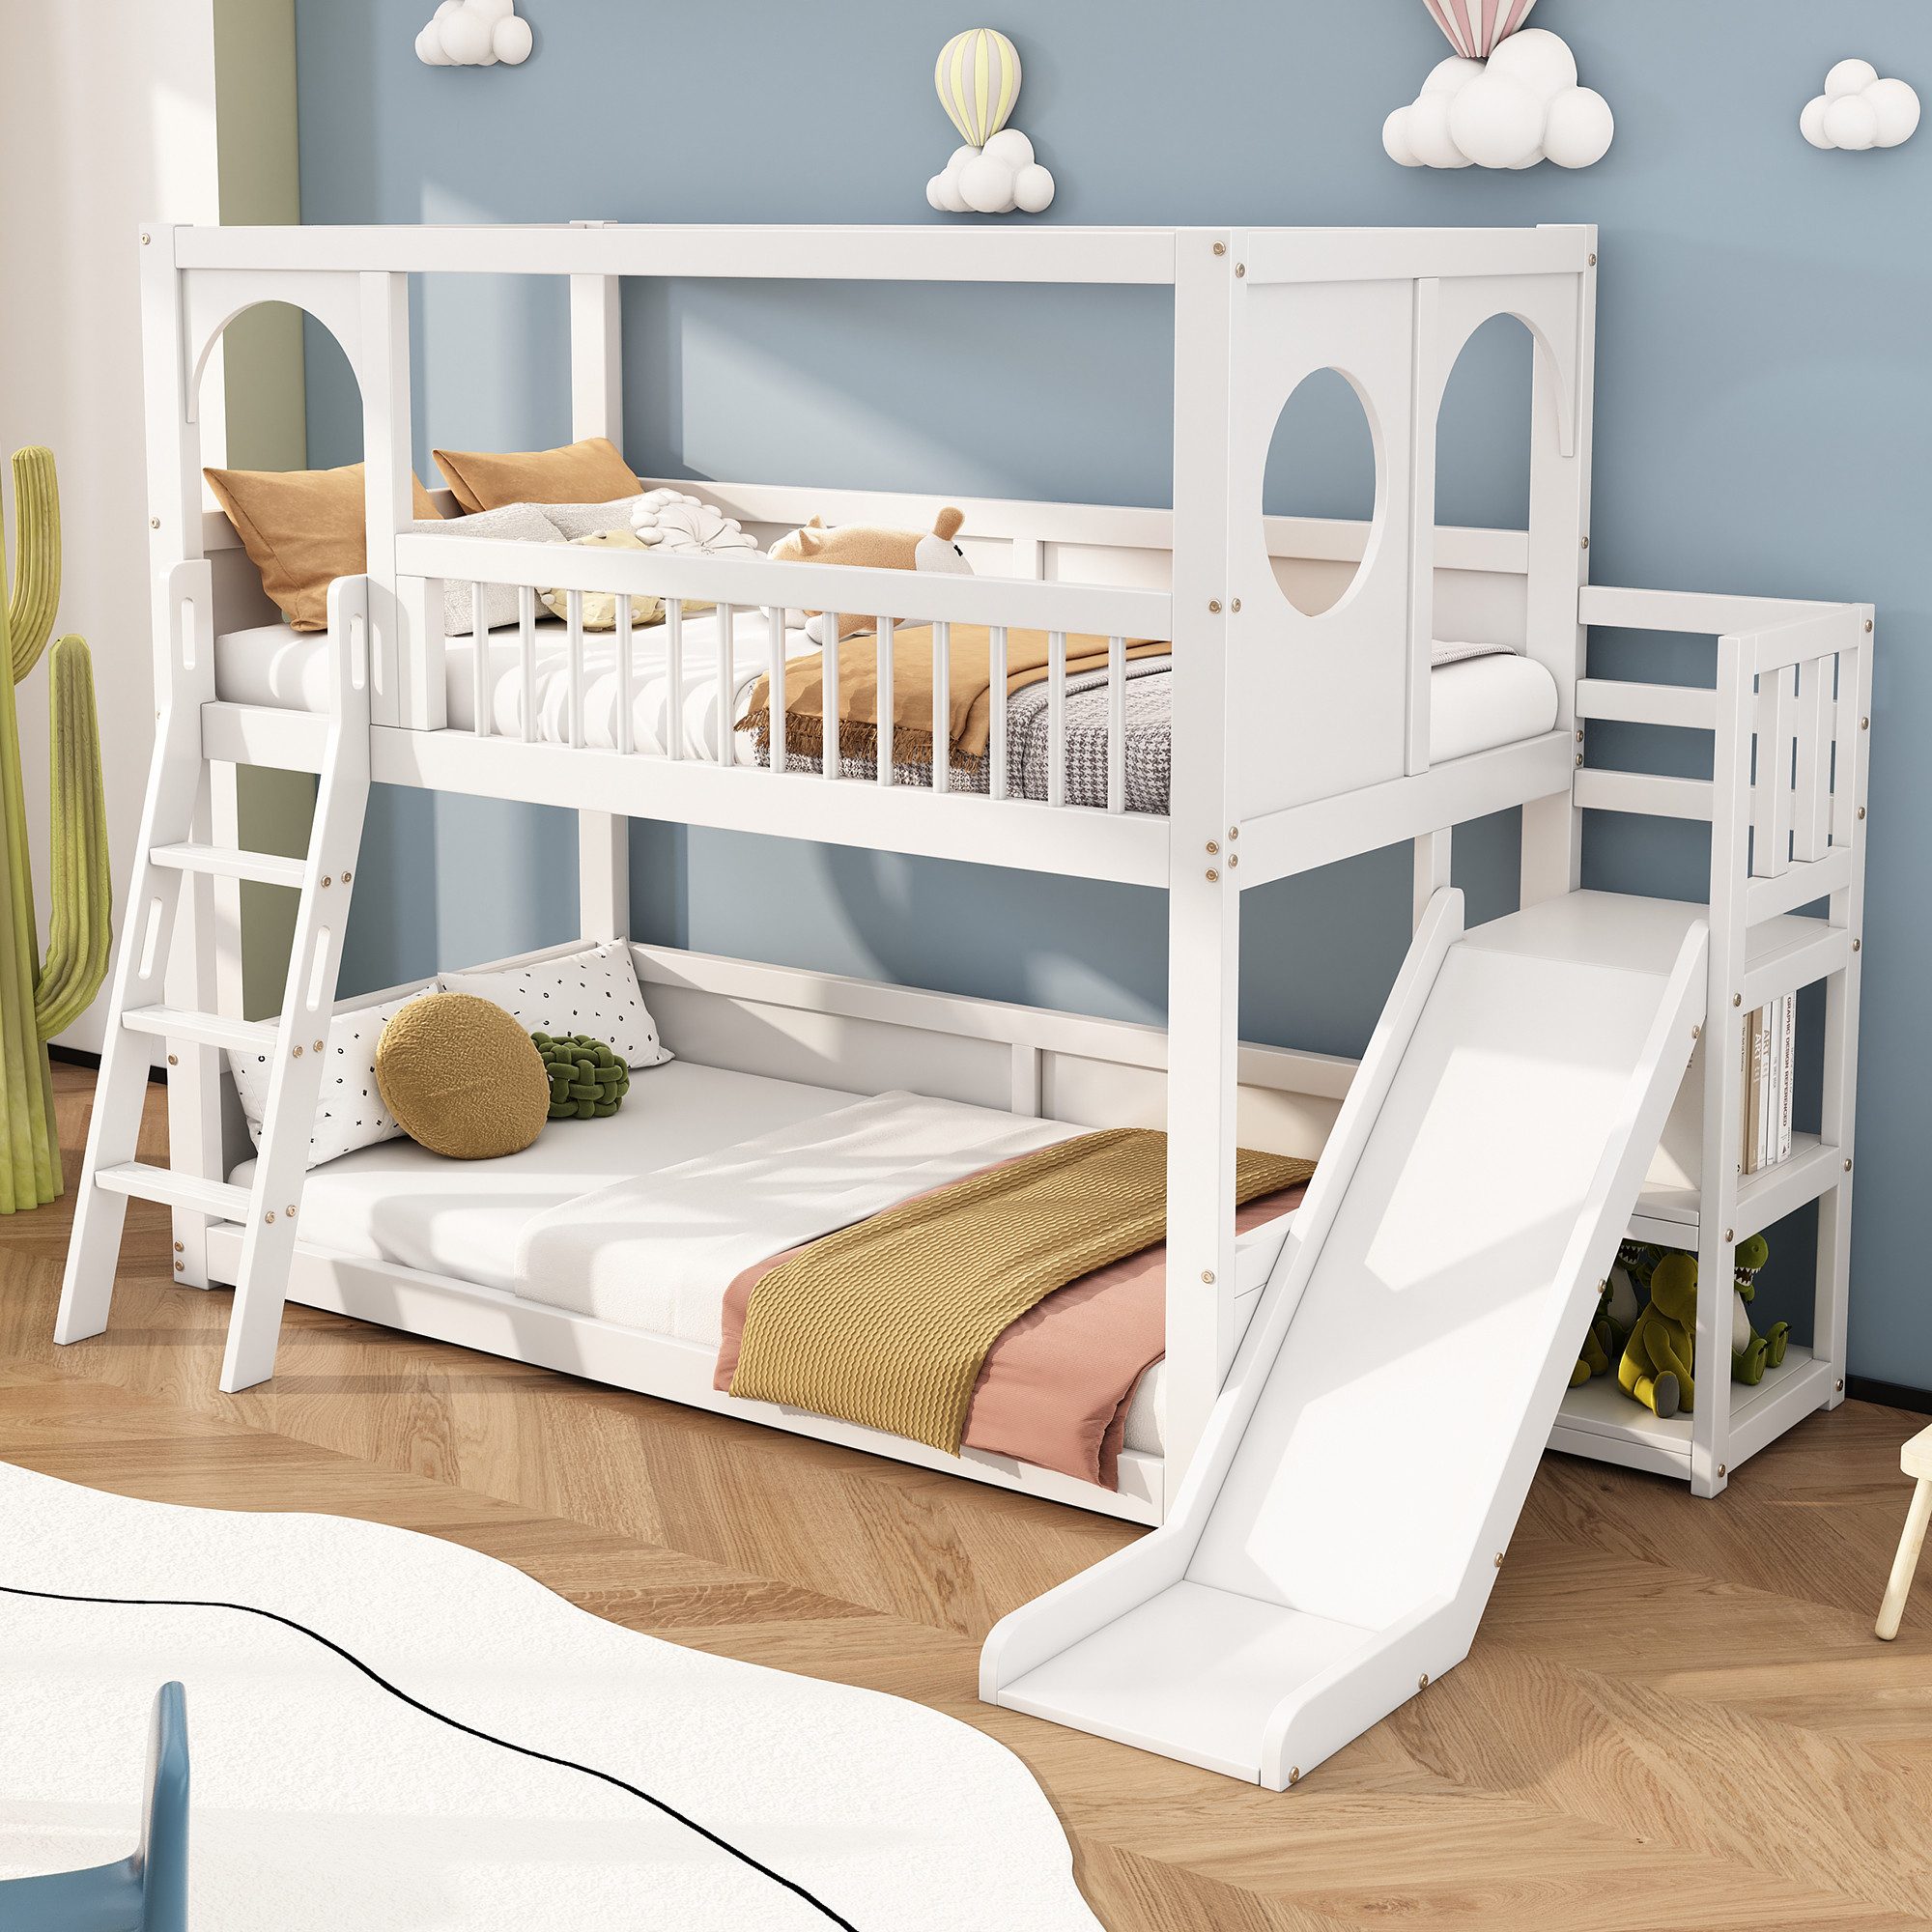 PFCTART Etagenbett Kinder-Etagenbett,Doppelbett,multifunktionales Kinderbett,mit Rutsche (ohne Matratze)